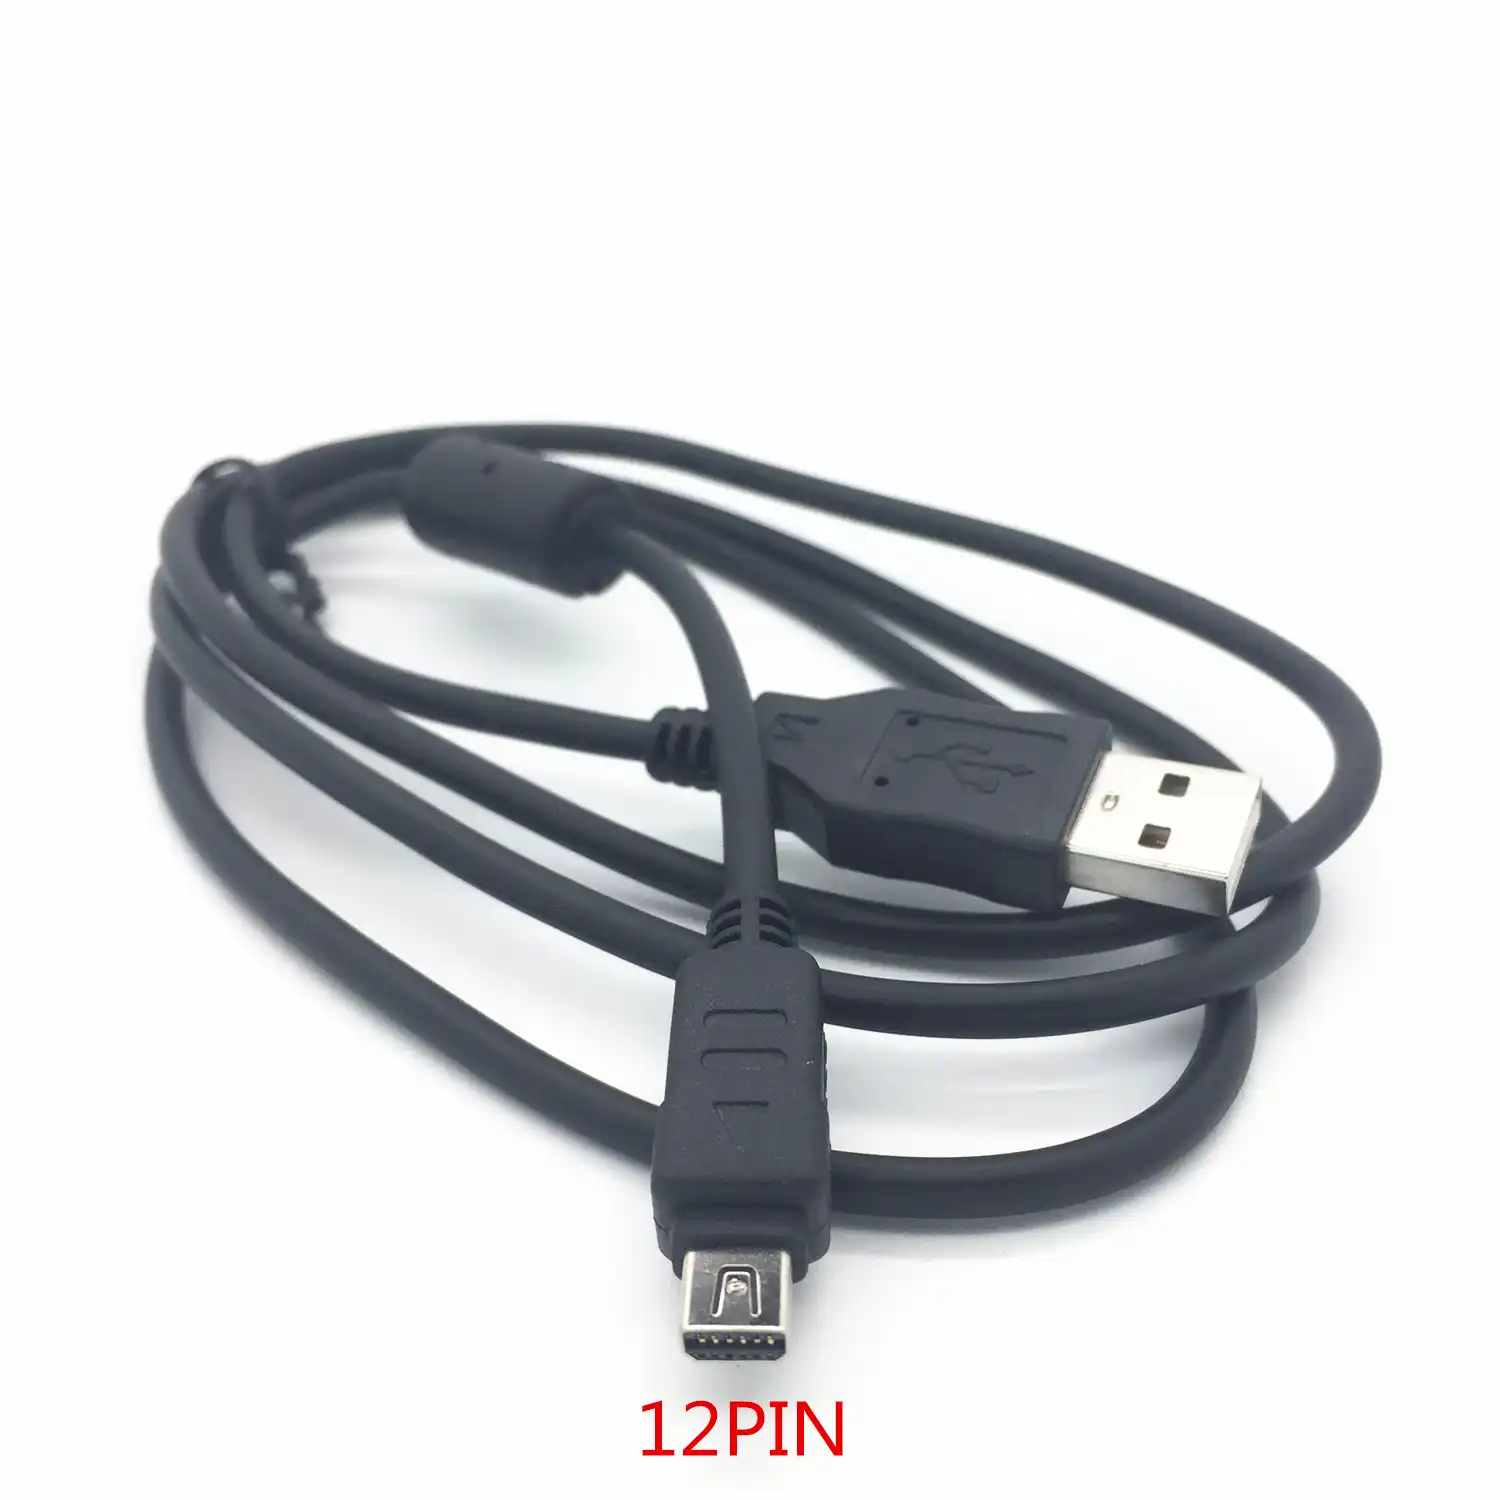 Eu Au Us Uk Plug Charger Usb Sync Cord Cable For Olympus Sp 570uz Sp 565uz E 410 E410 U0 U810 U795sw U790sw Phone Adapters Converters Aliexpress